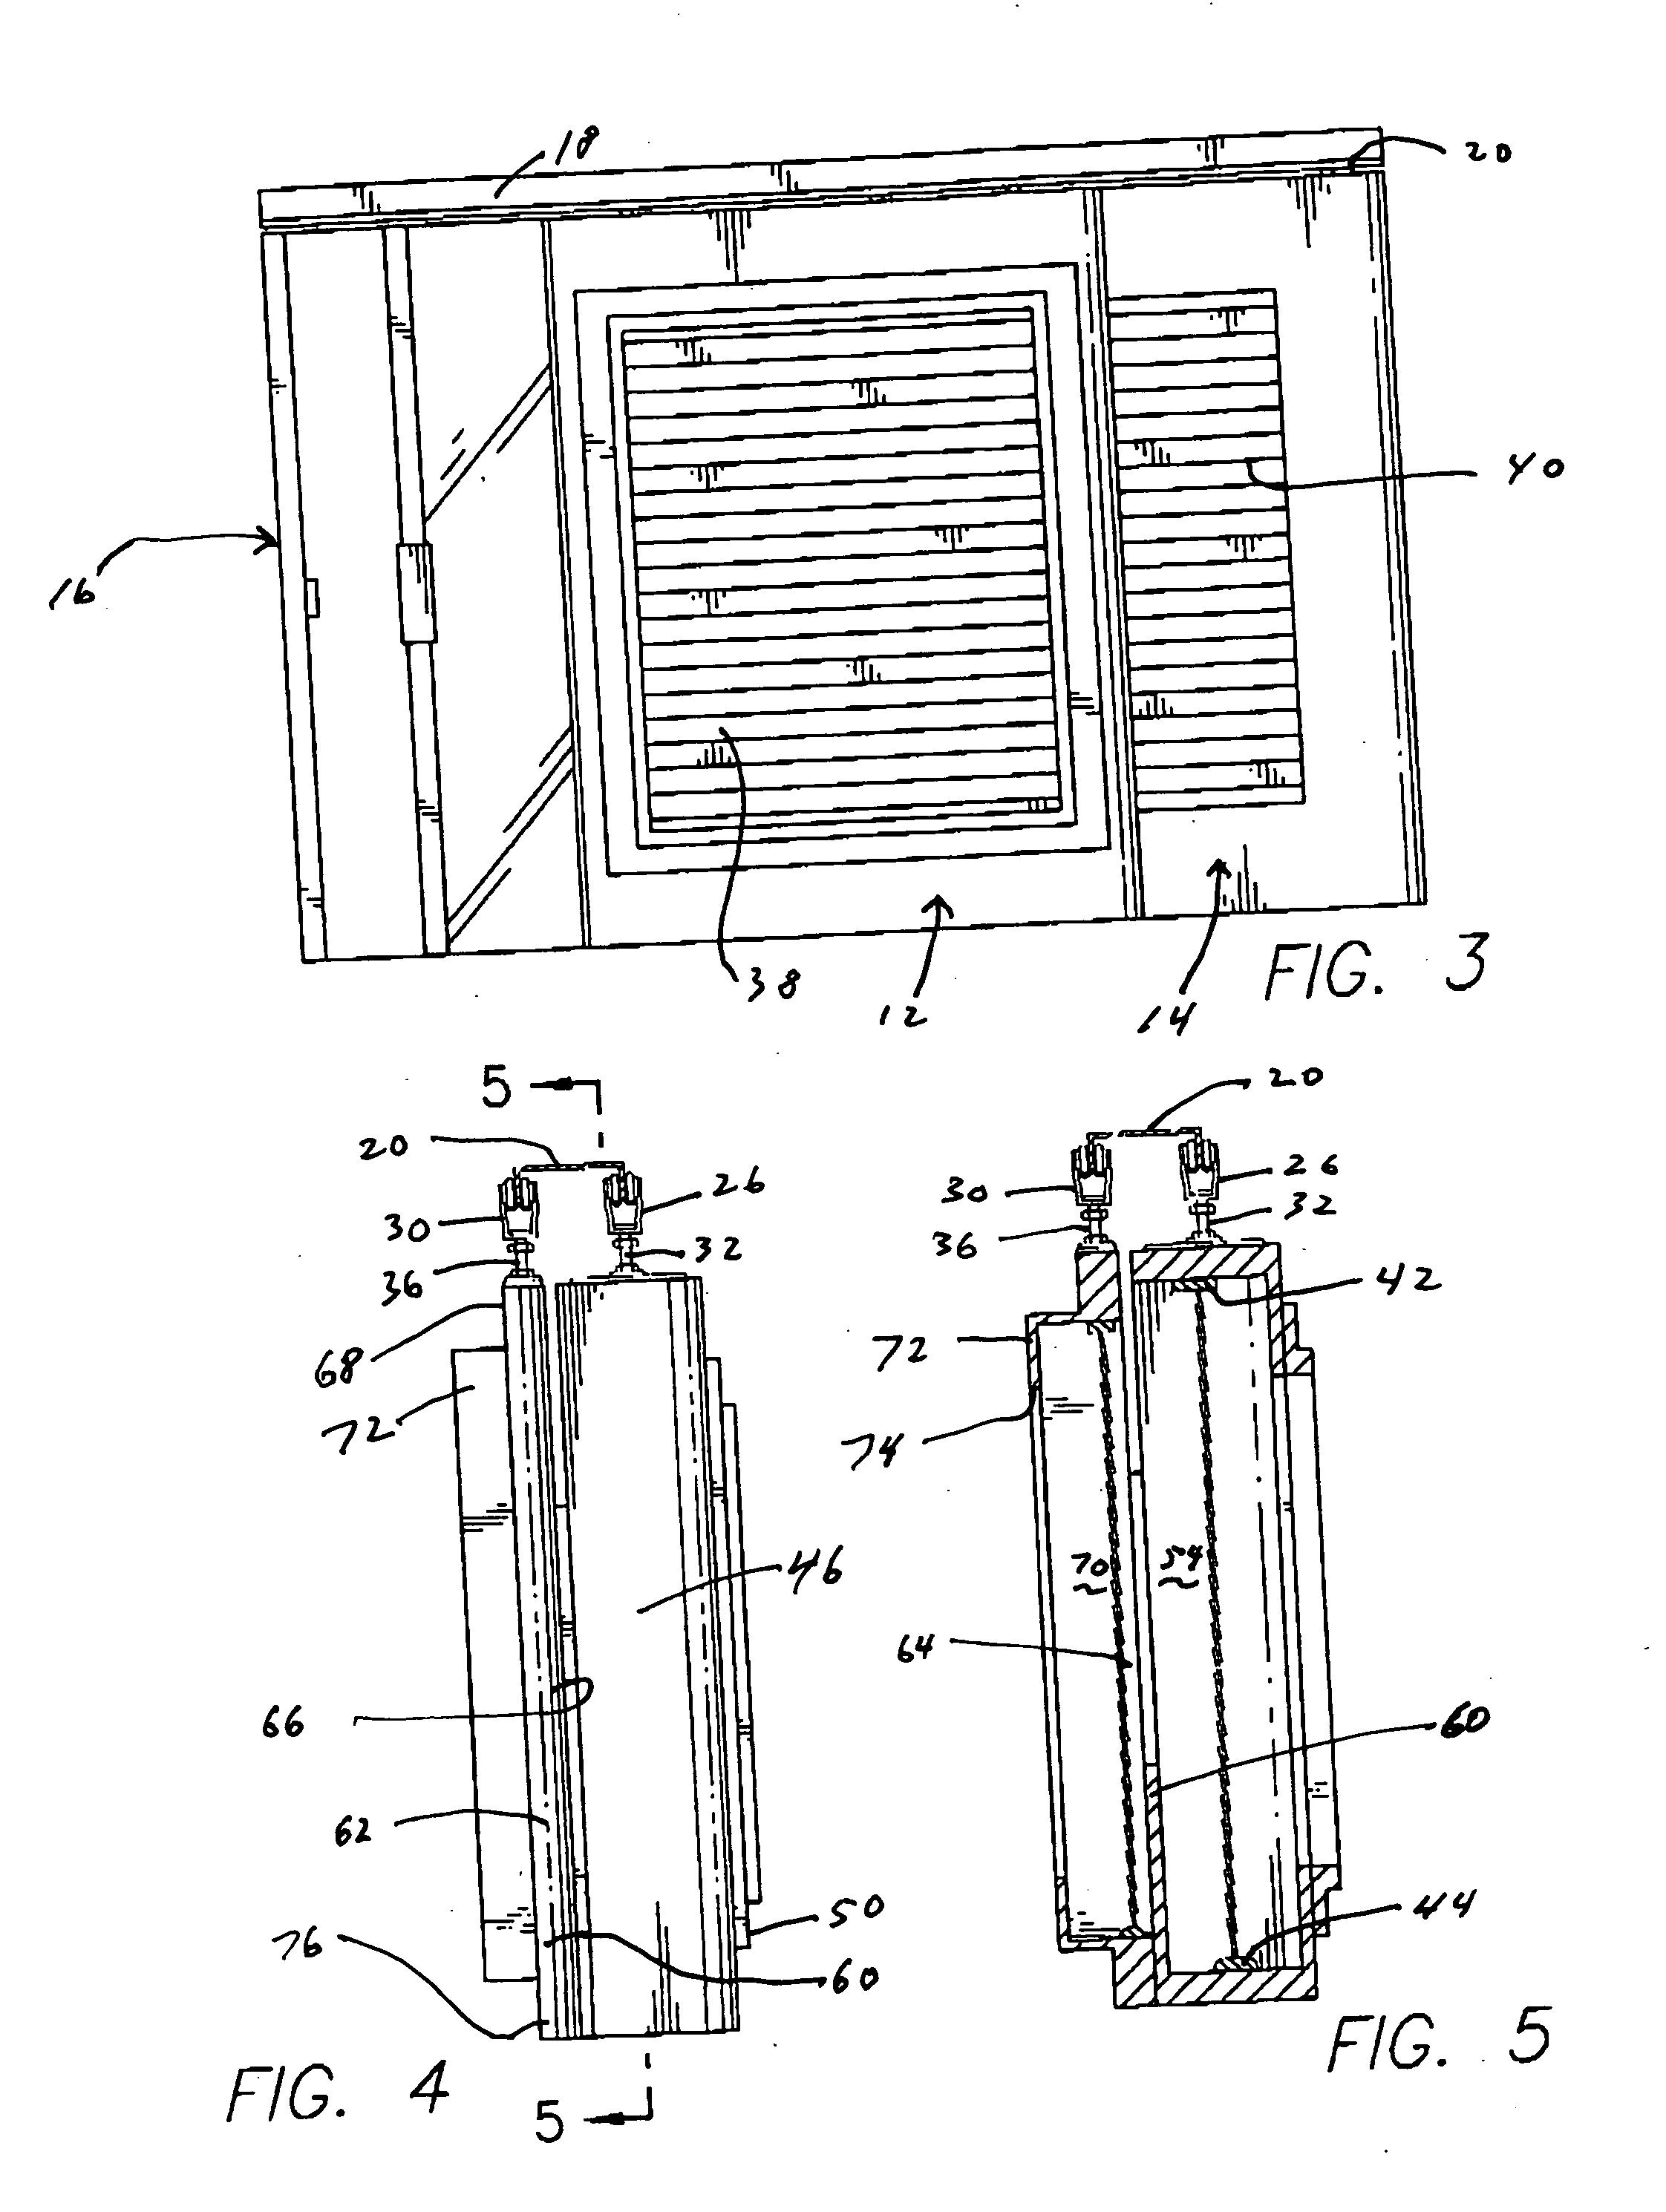 Assembly of sashes for sliding glass doors